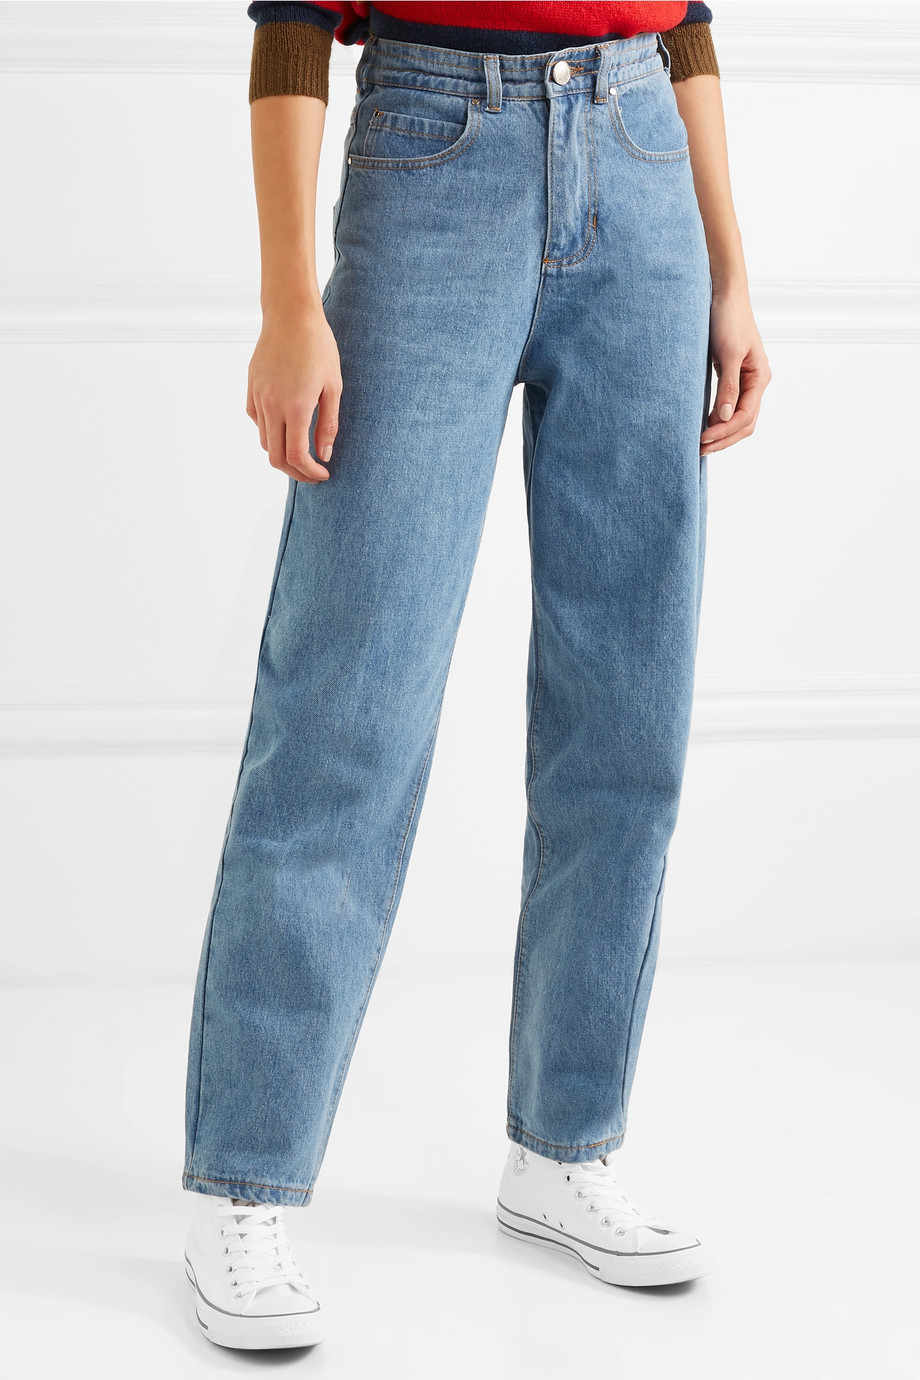 elastic waist jeans